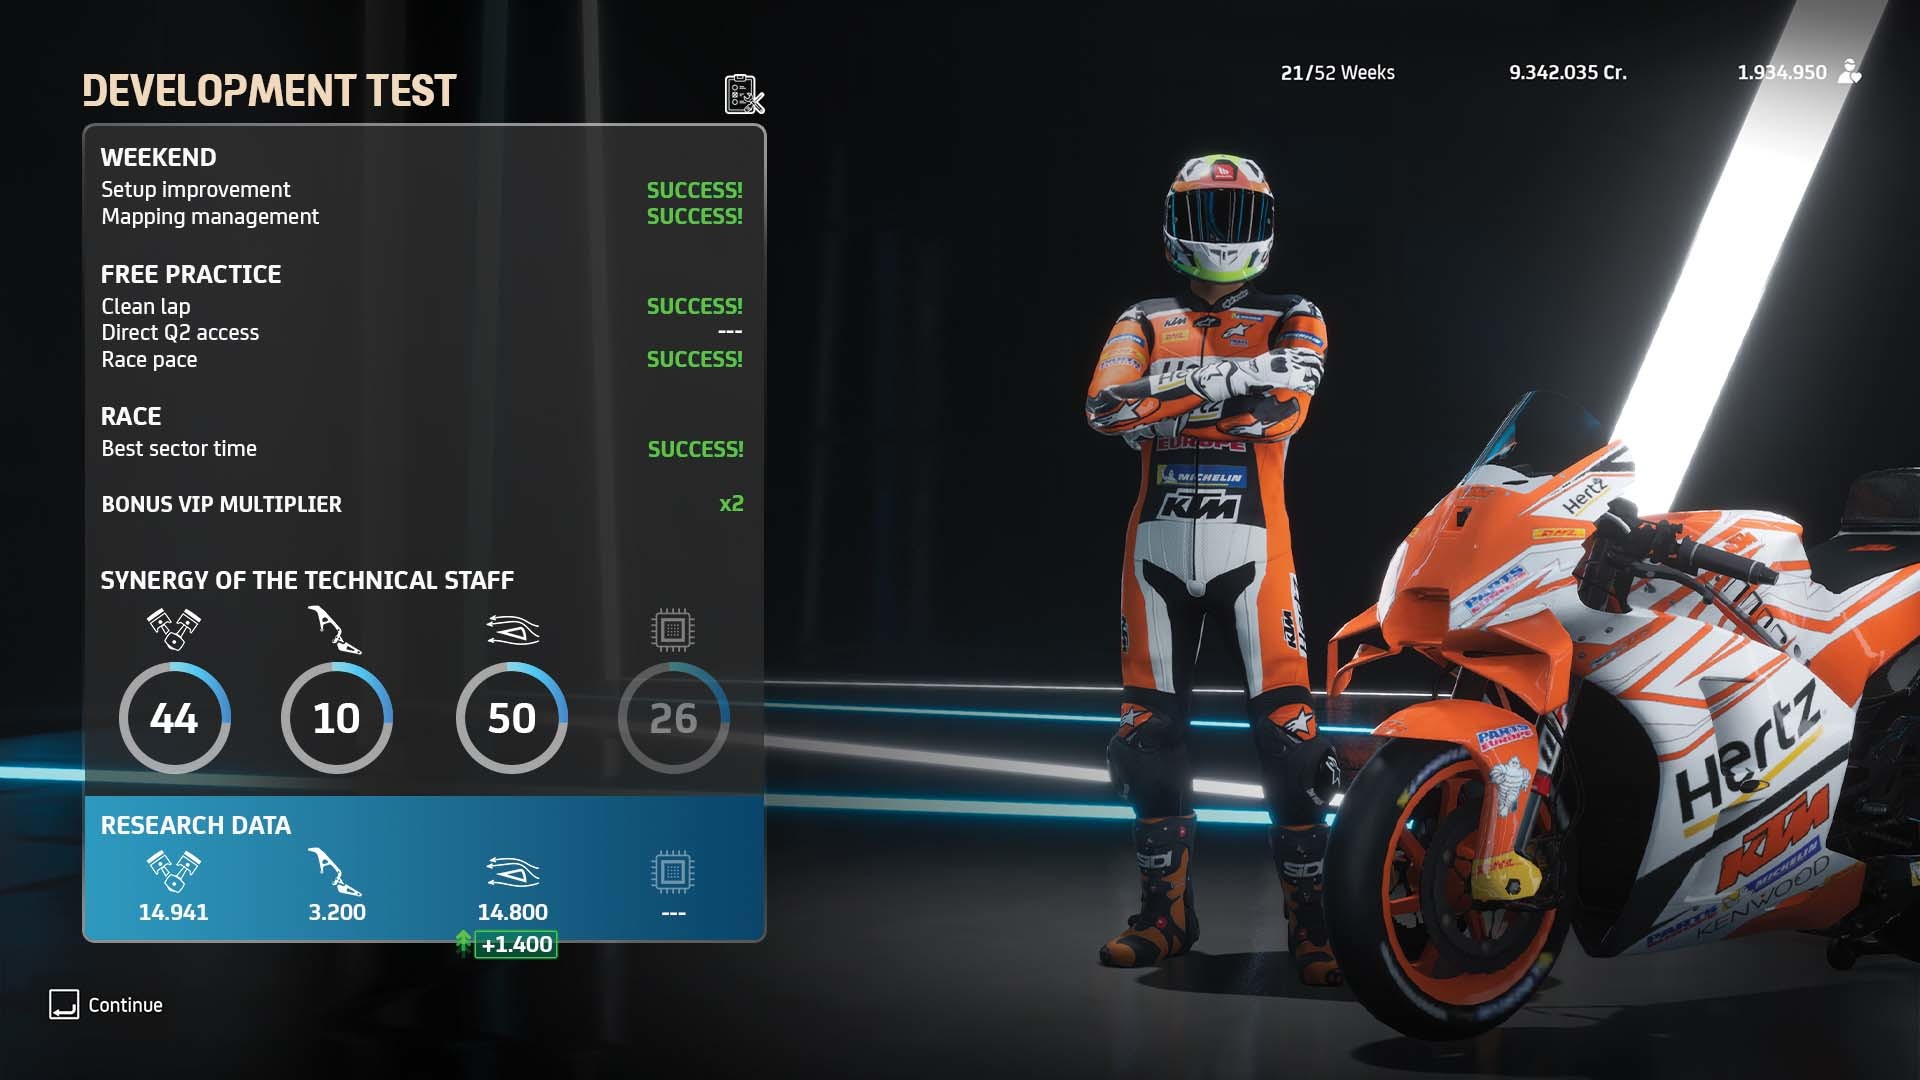 MotoGP™22 on Steam